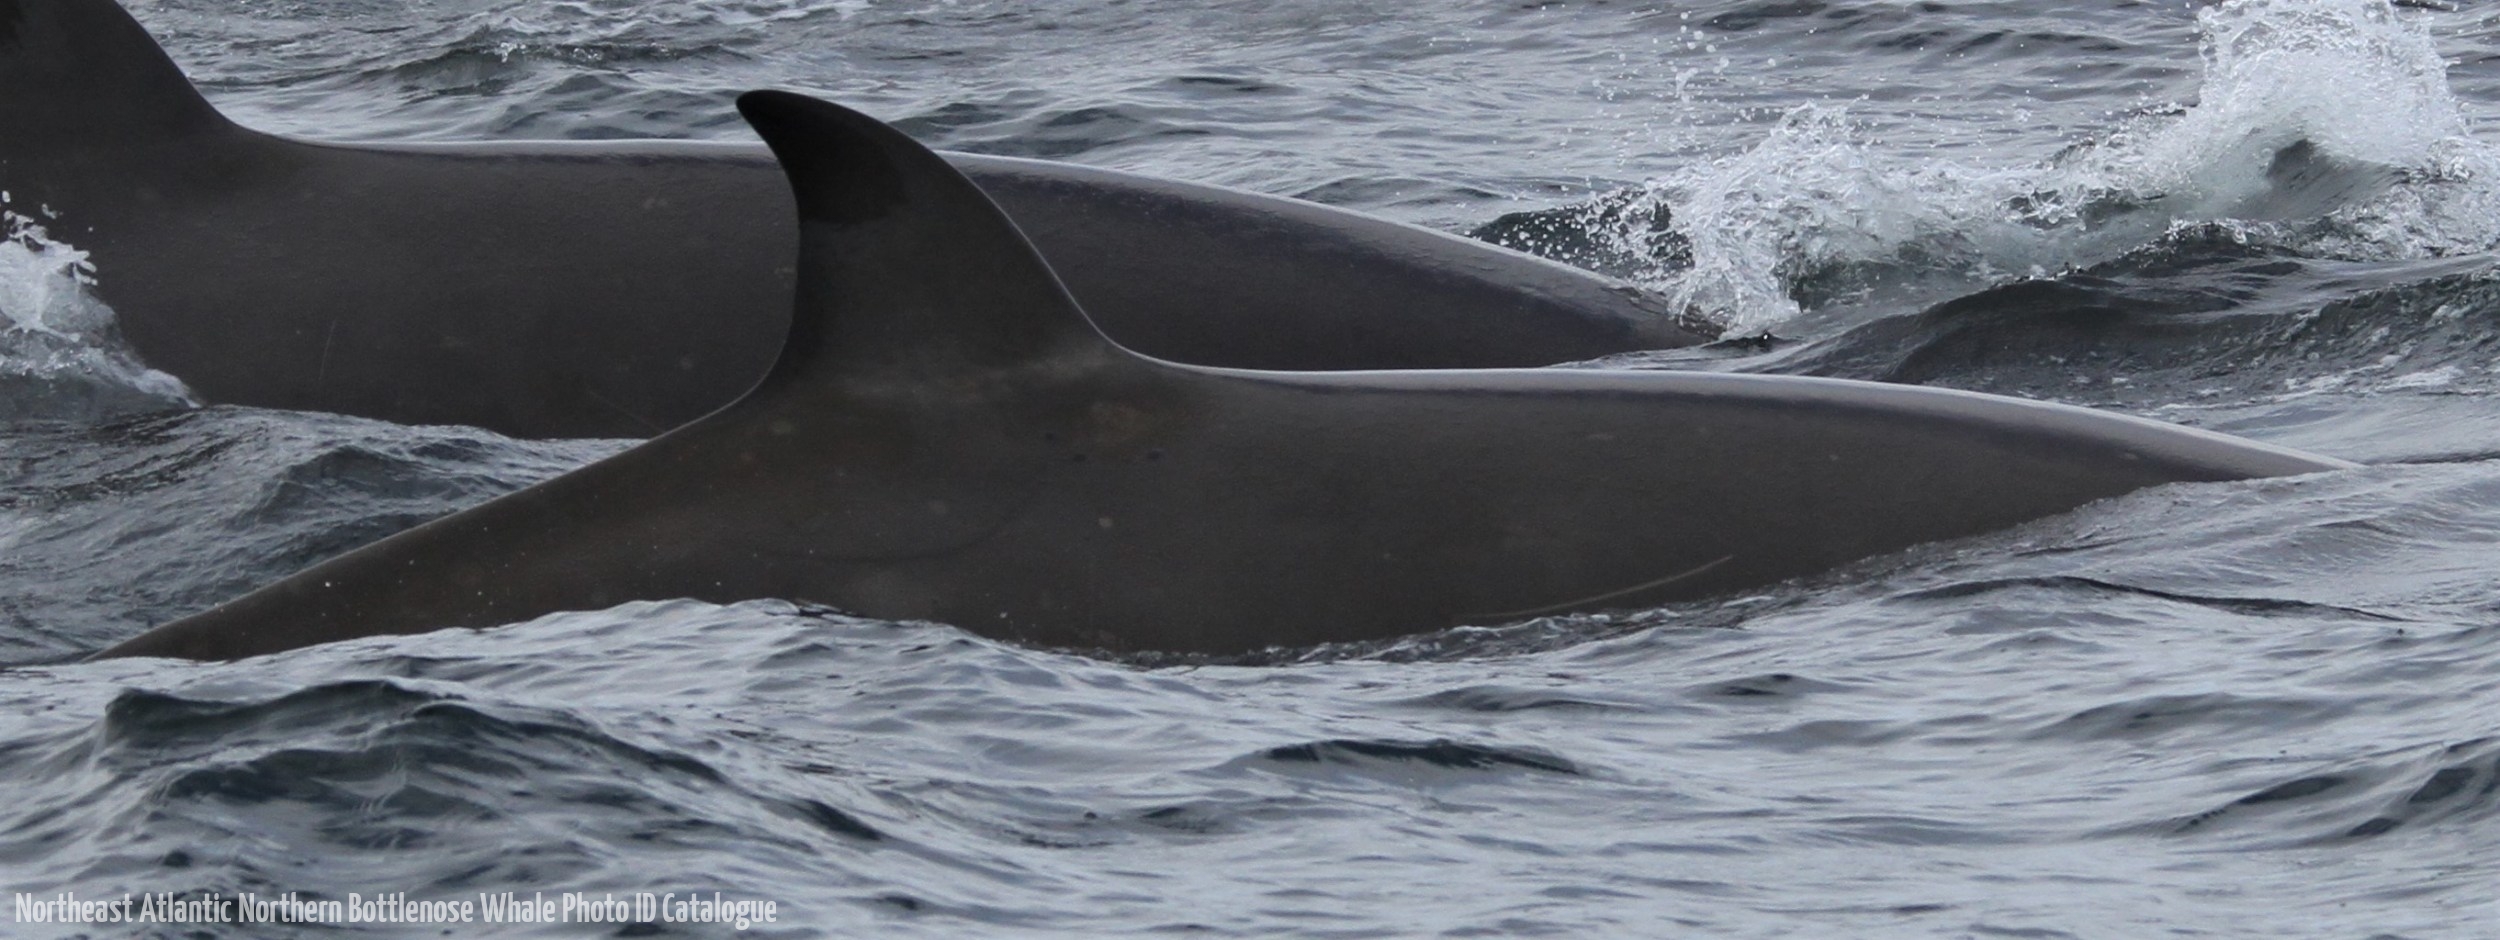 Whale ID: 0276,  Date taken: 06-07-2013,  Photographer: Paul H. Ensor